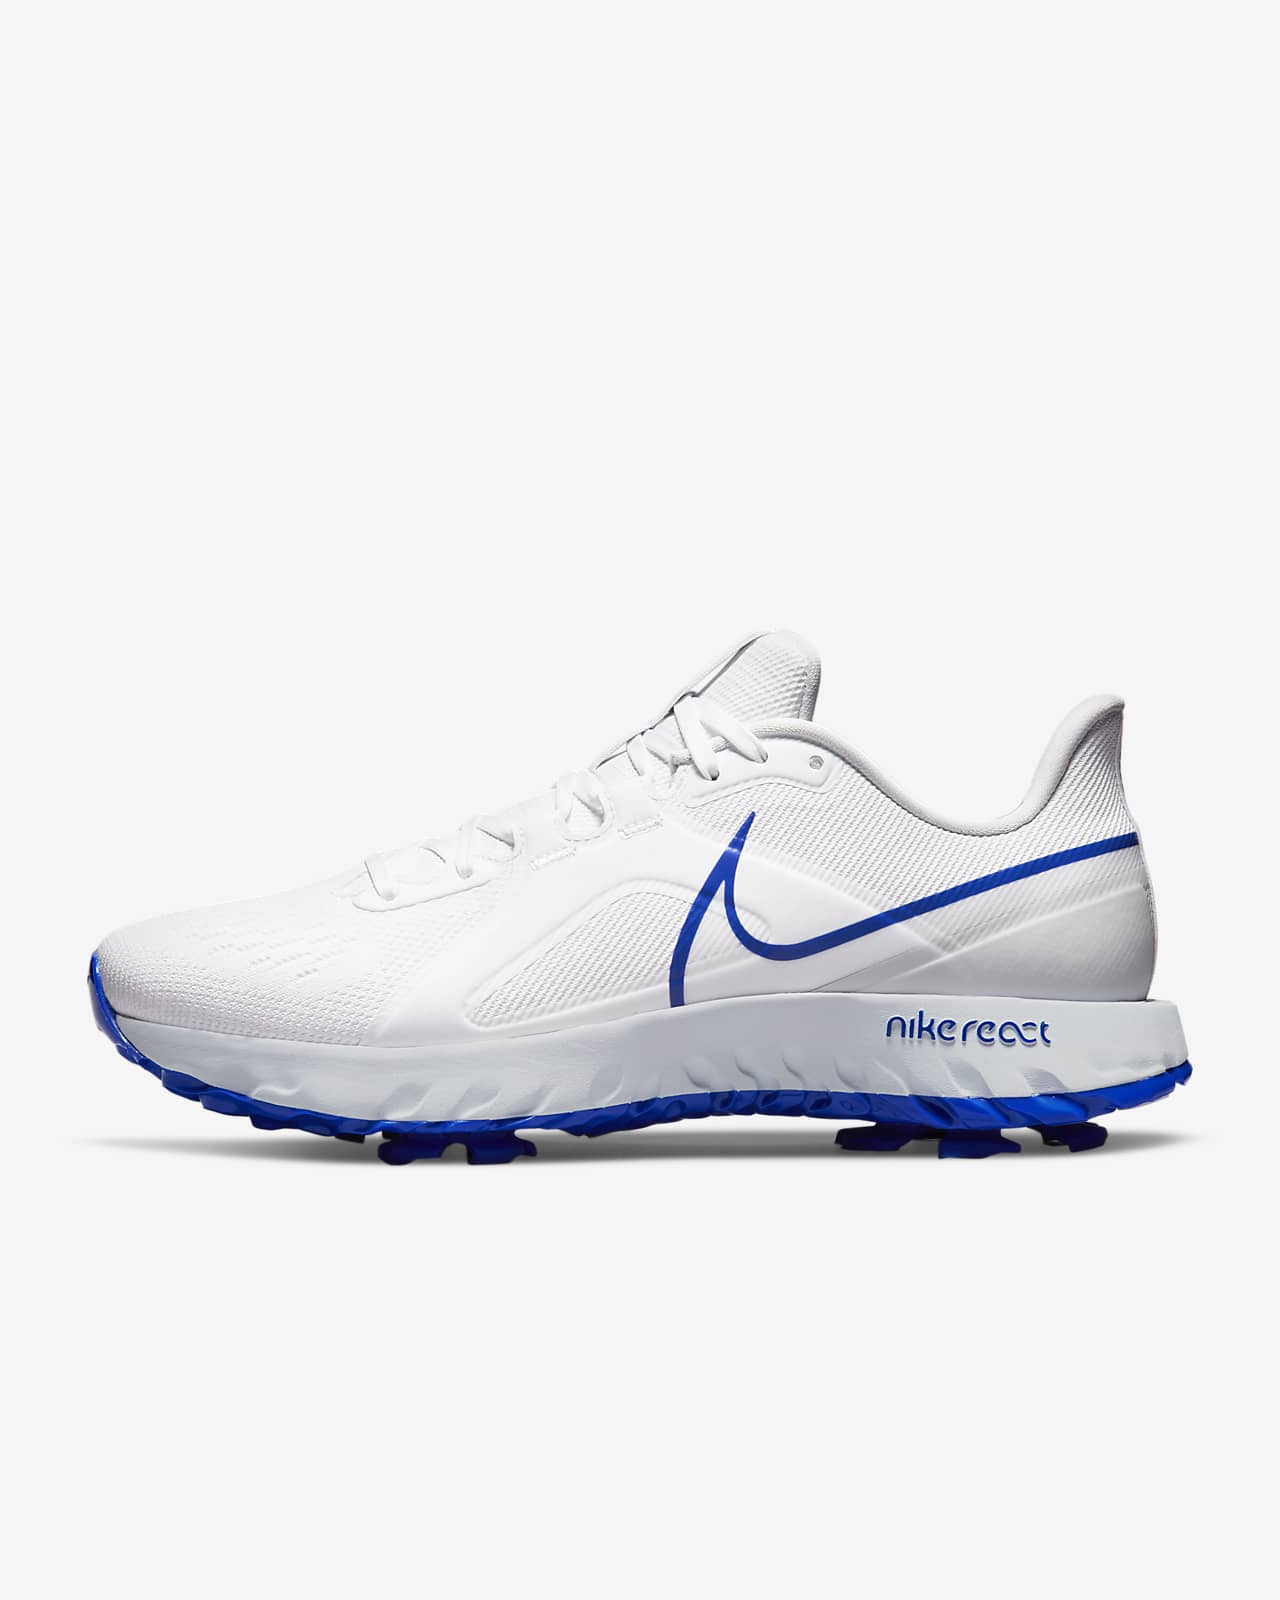 Nike React Infinity Pro Golf Shoe